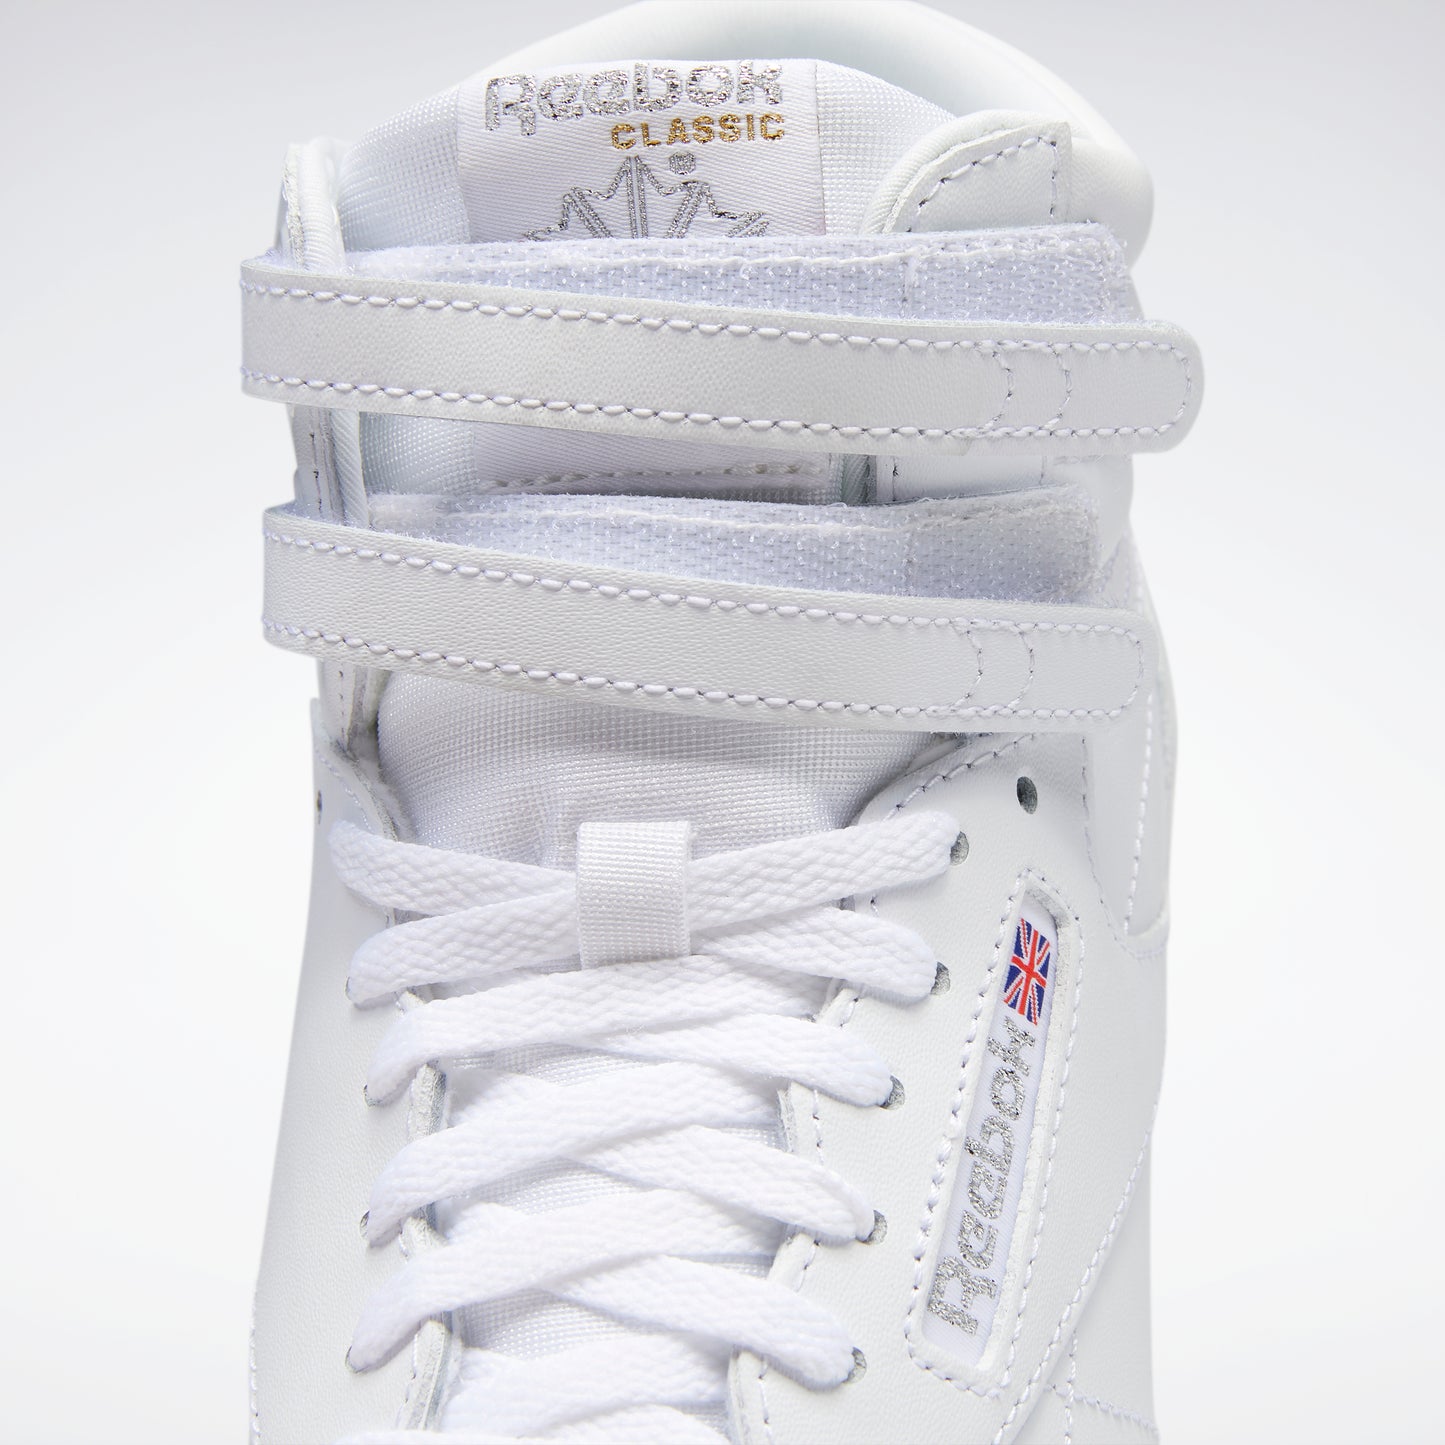 Reebok Footwear Kids Ex-O-Fit Hi Junior White/Silver